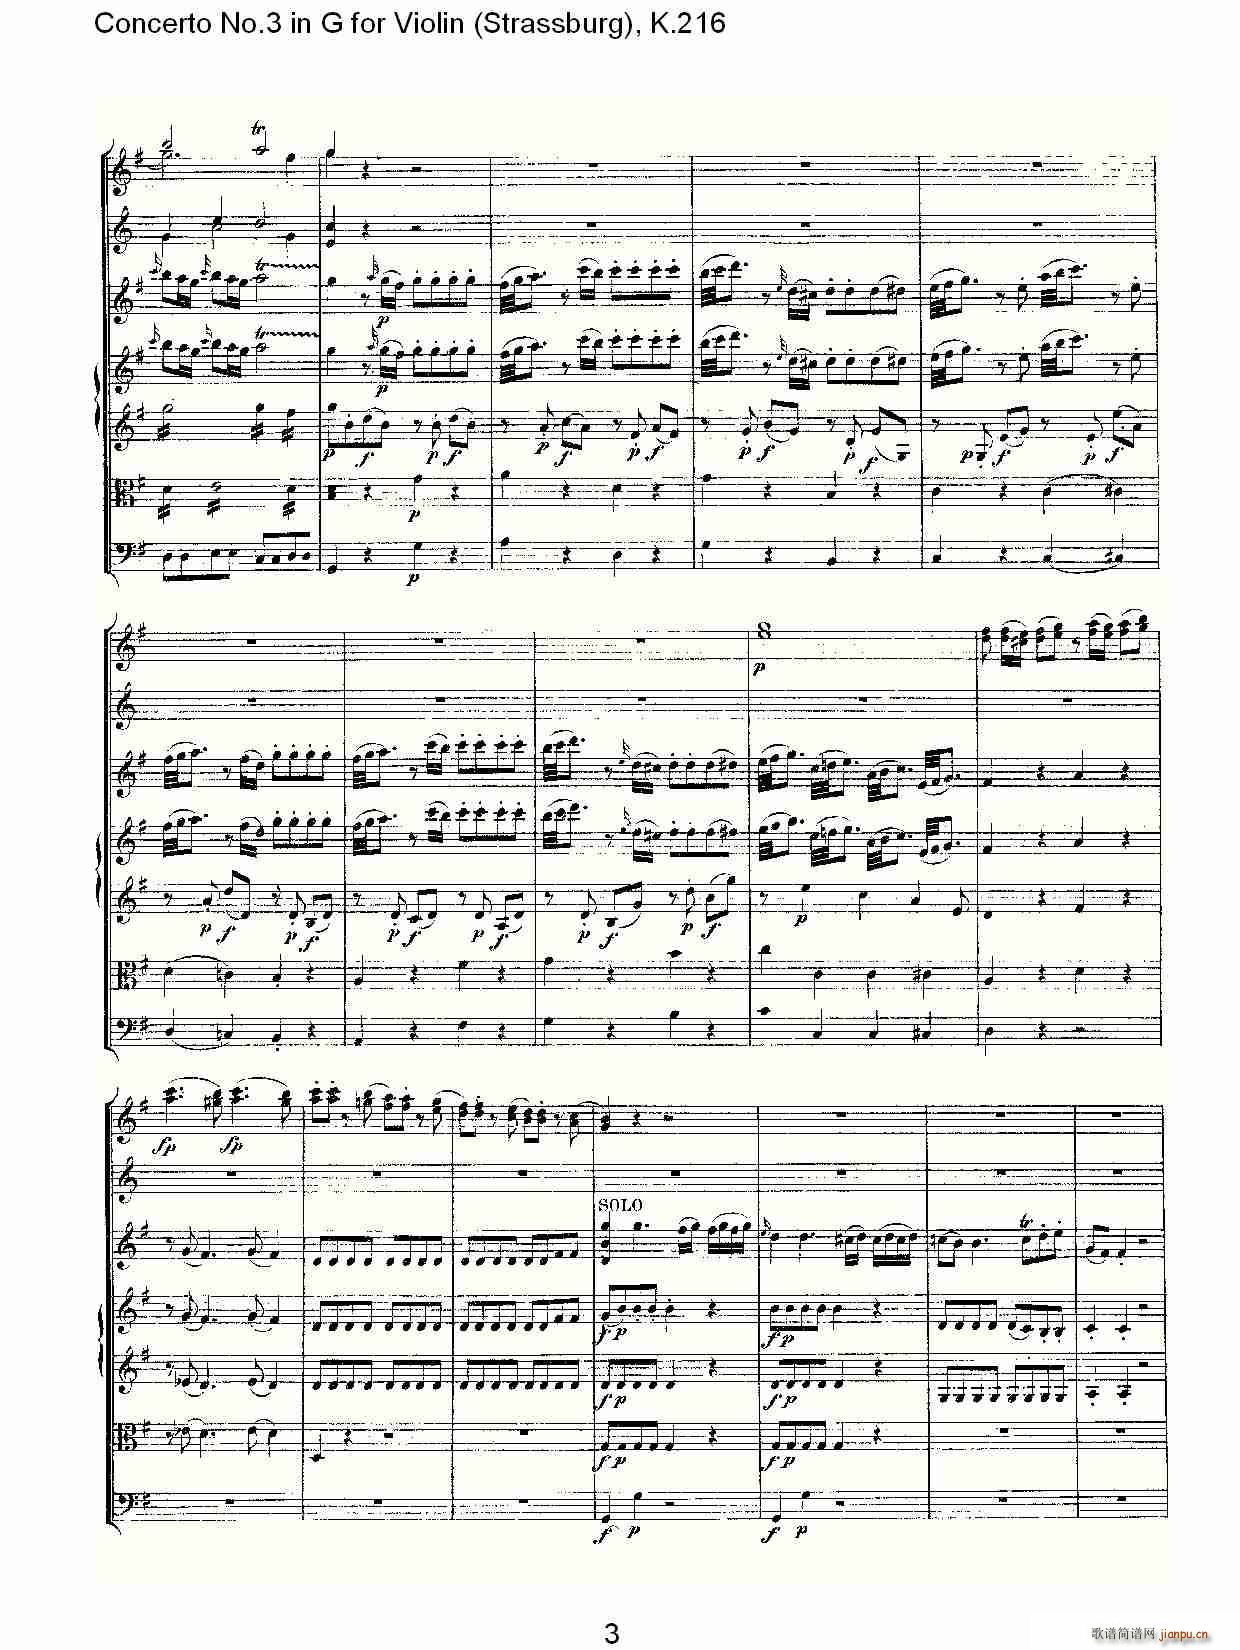 Concerto No.3 in G for Violin K.216(С)3